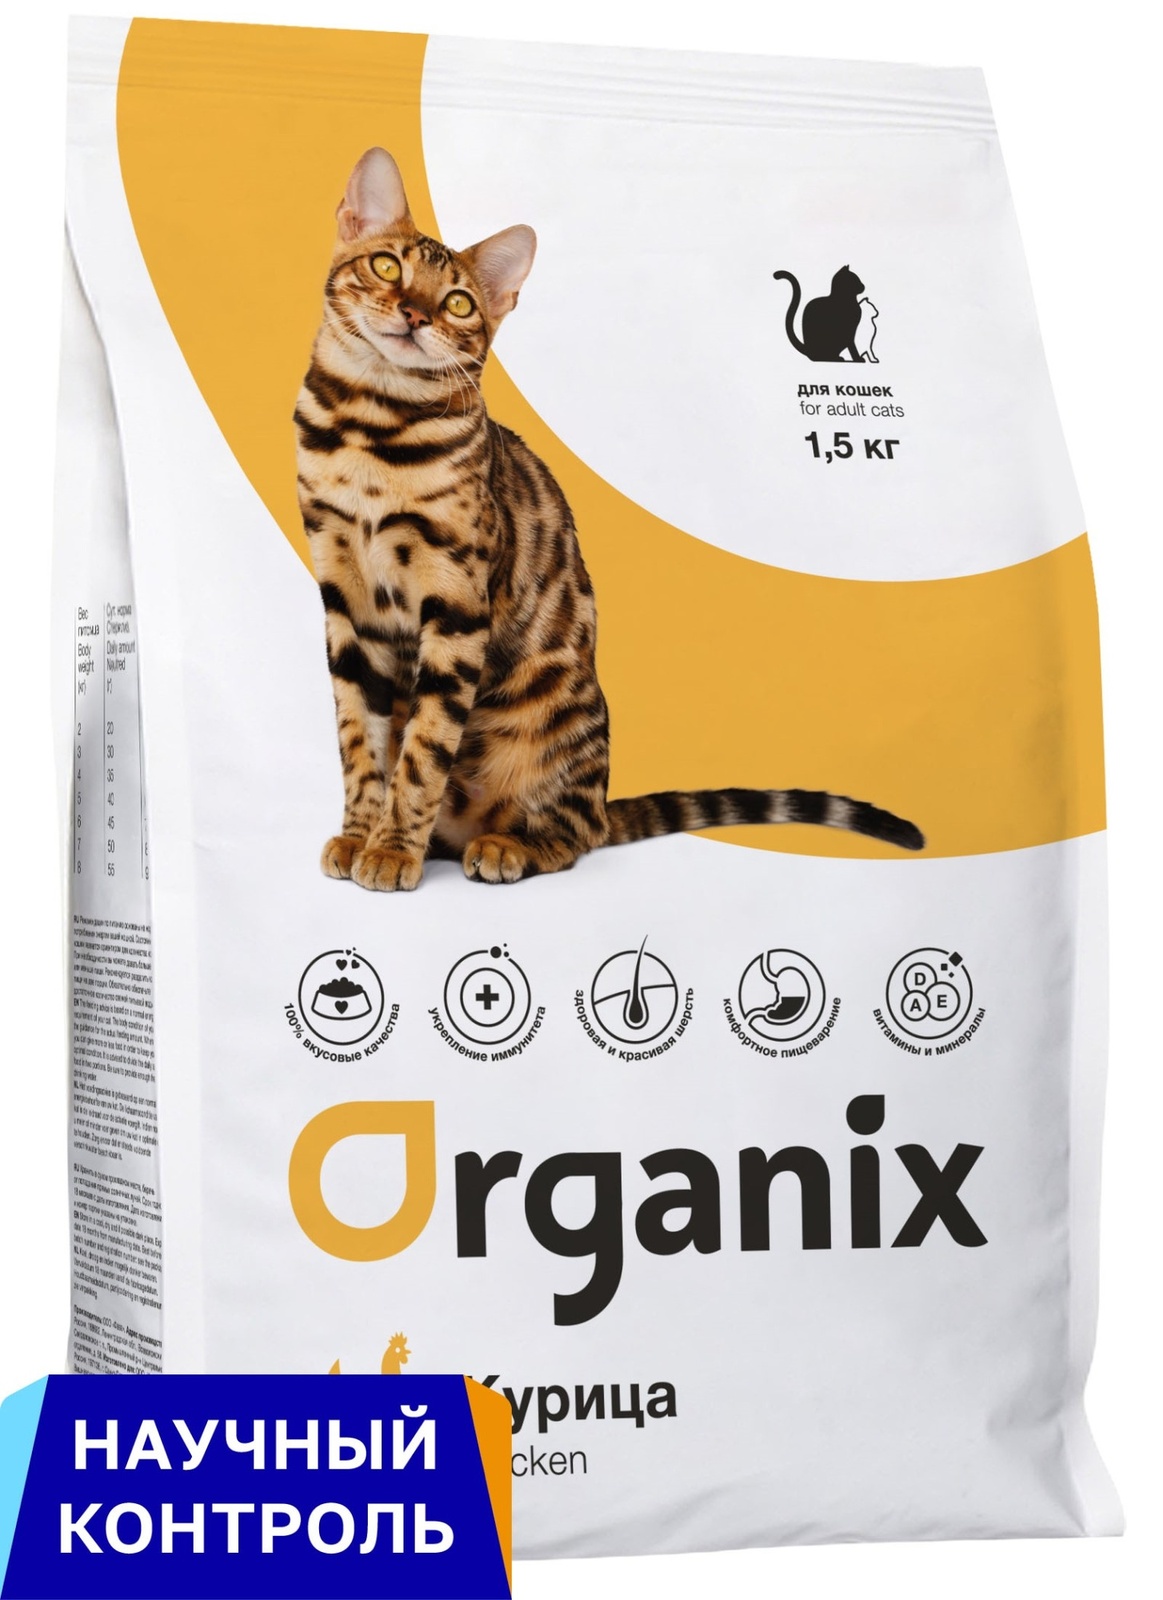 Organix Organix сухой корм для кошек, с курочкой (18 кг) organix organix сухой корм для кошек с курочкой 7 5 кг